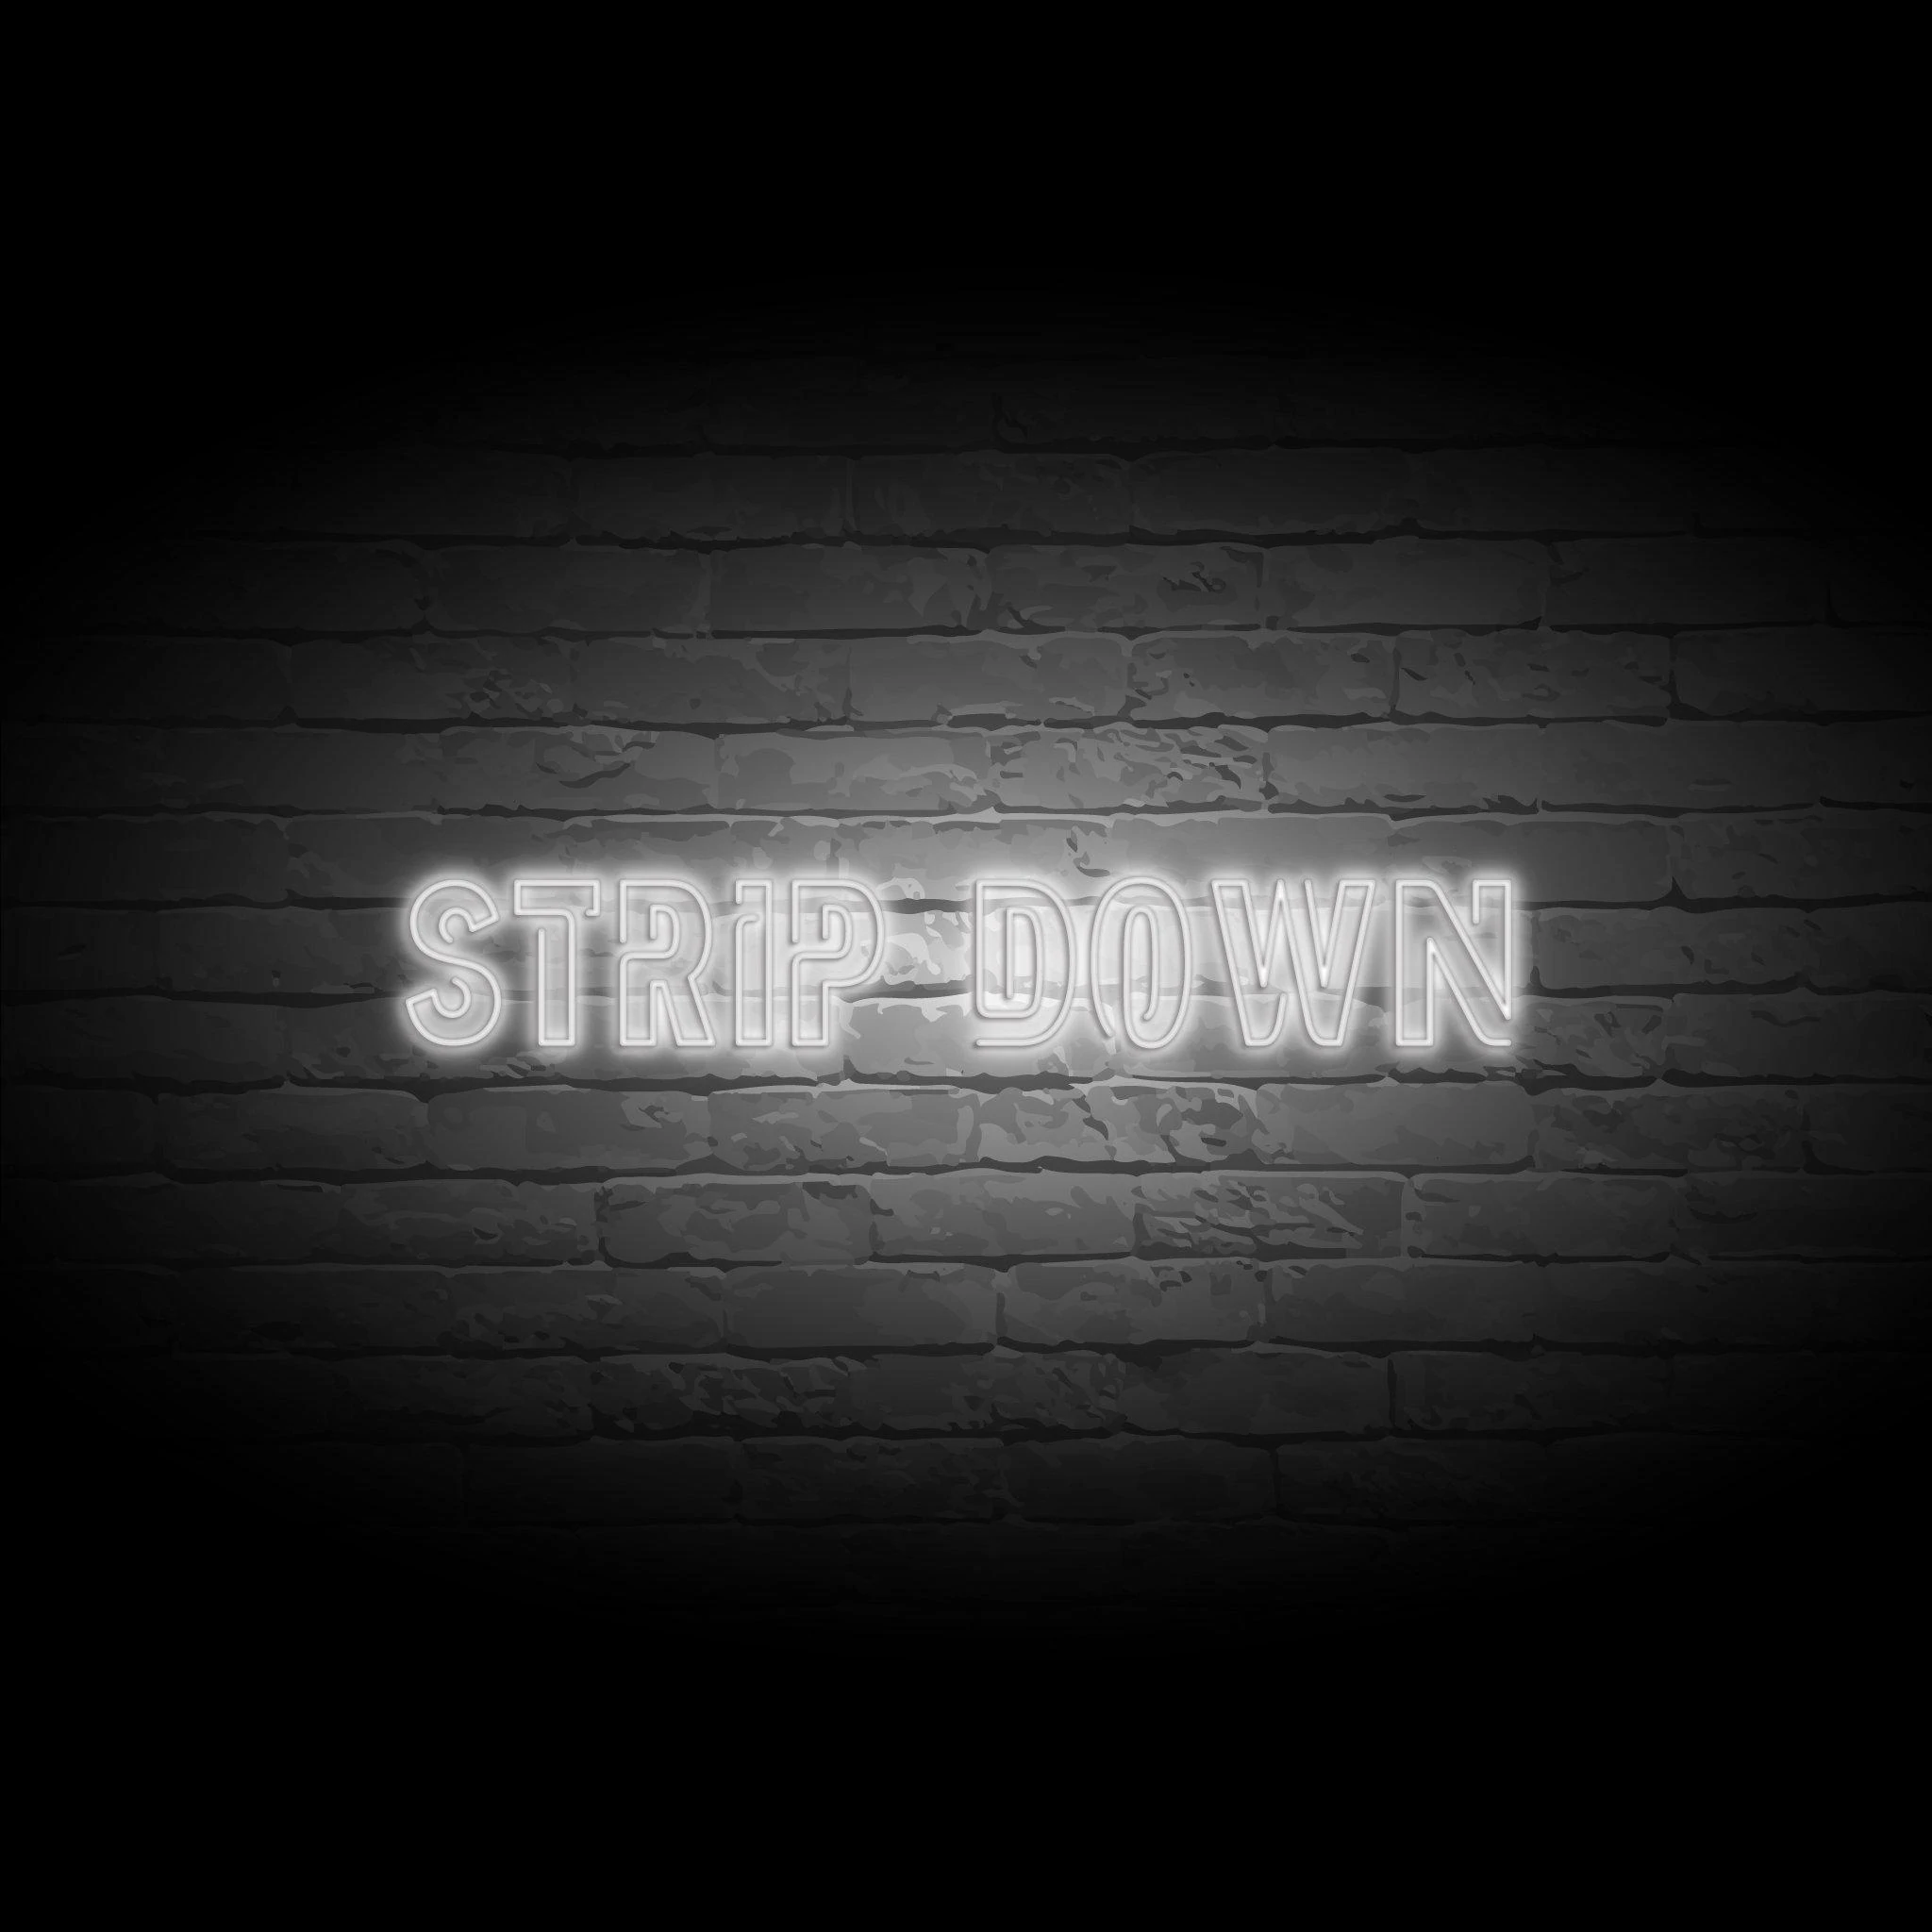 'STRIP DOWN' NEON SIGN